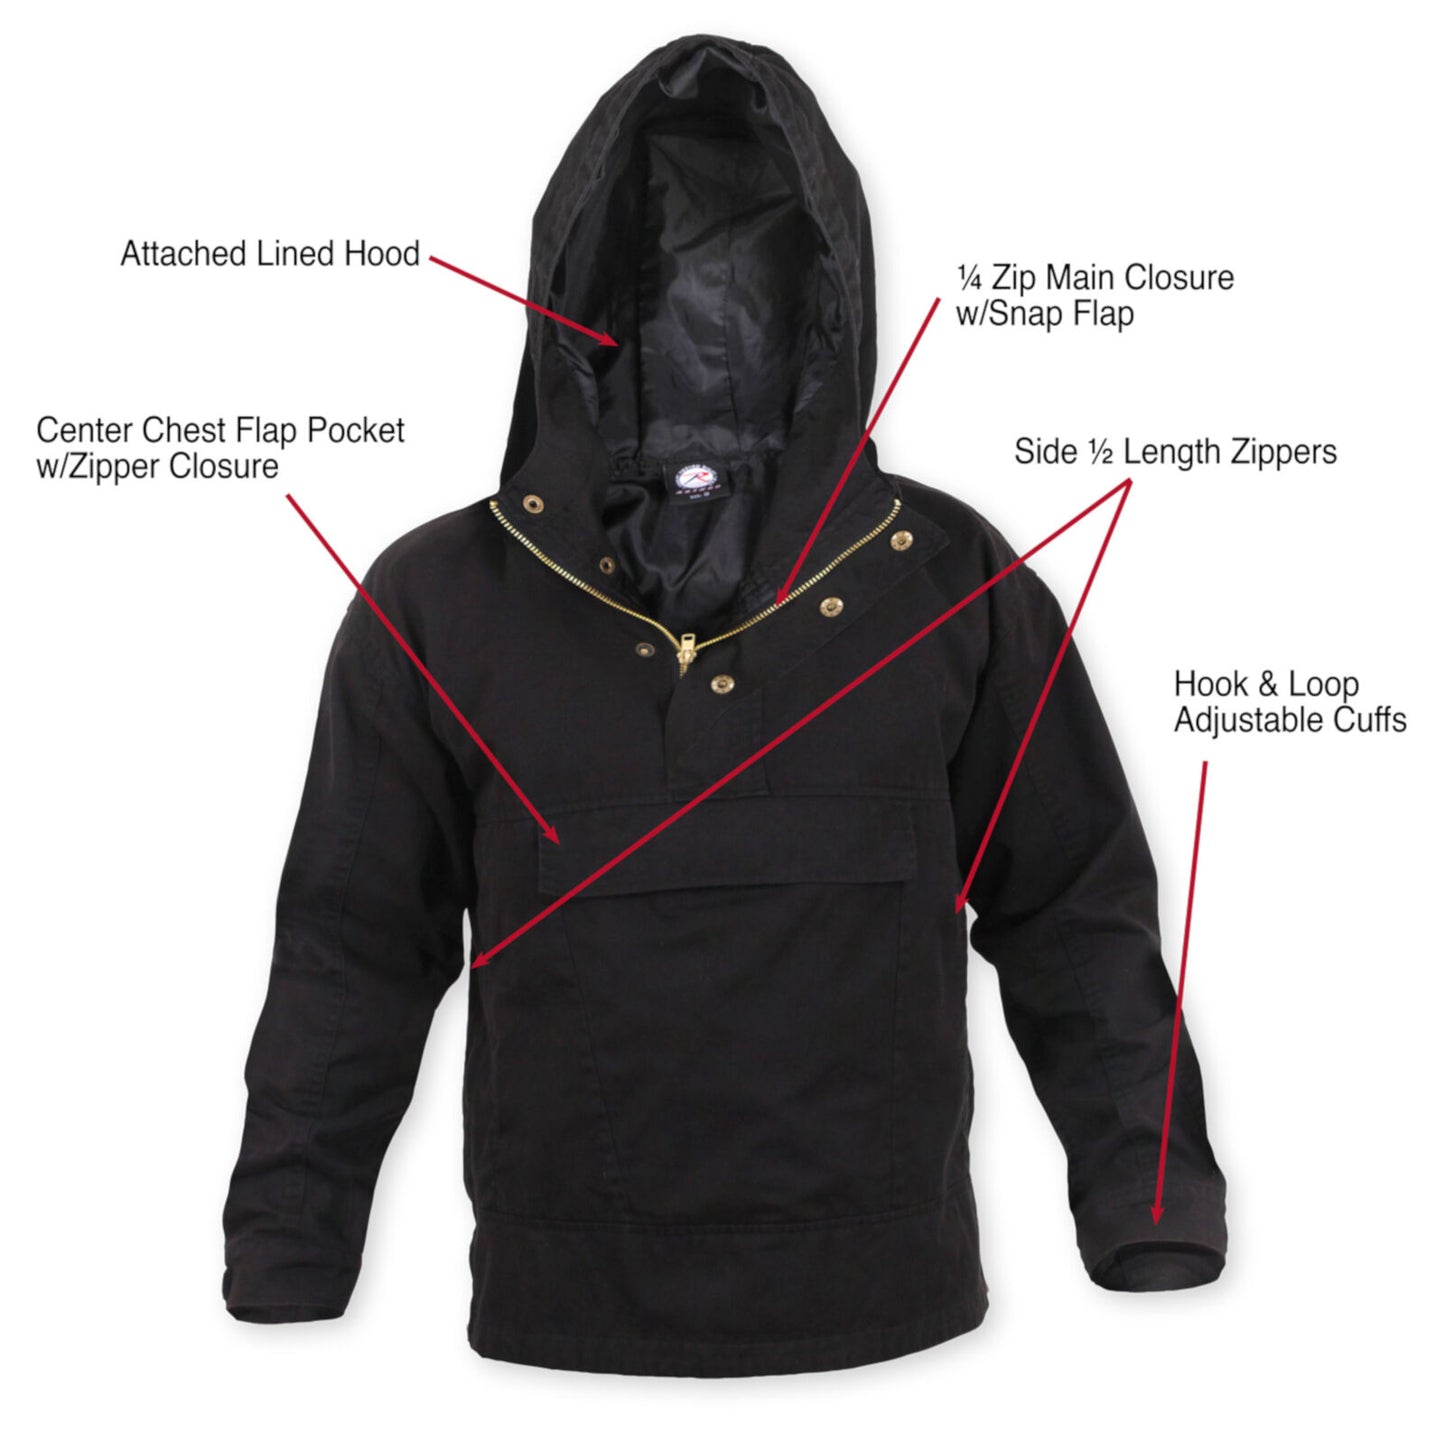 Men's Black Camo Quarter Zip Anorak Parka - Tactical Pullover Jacket With Hood